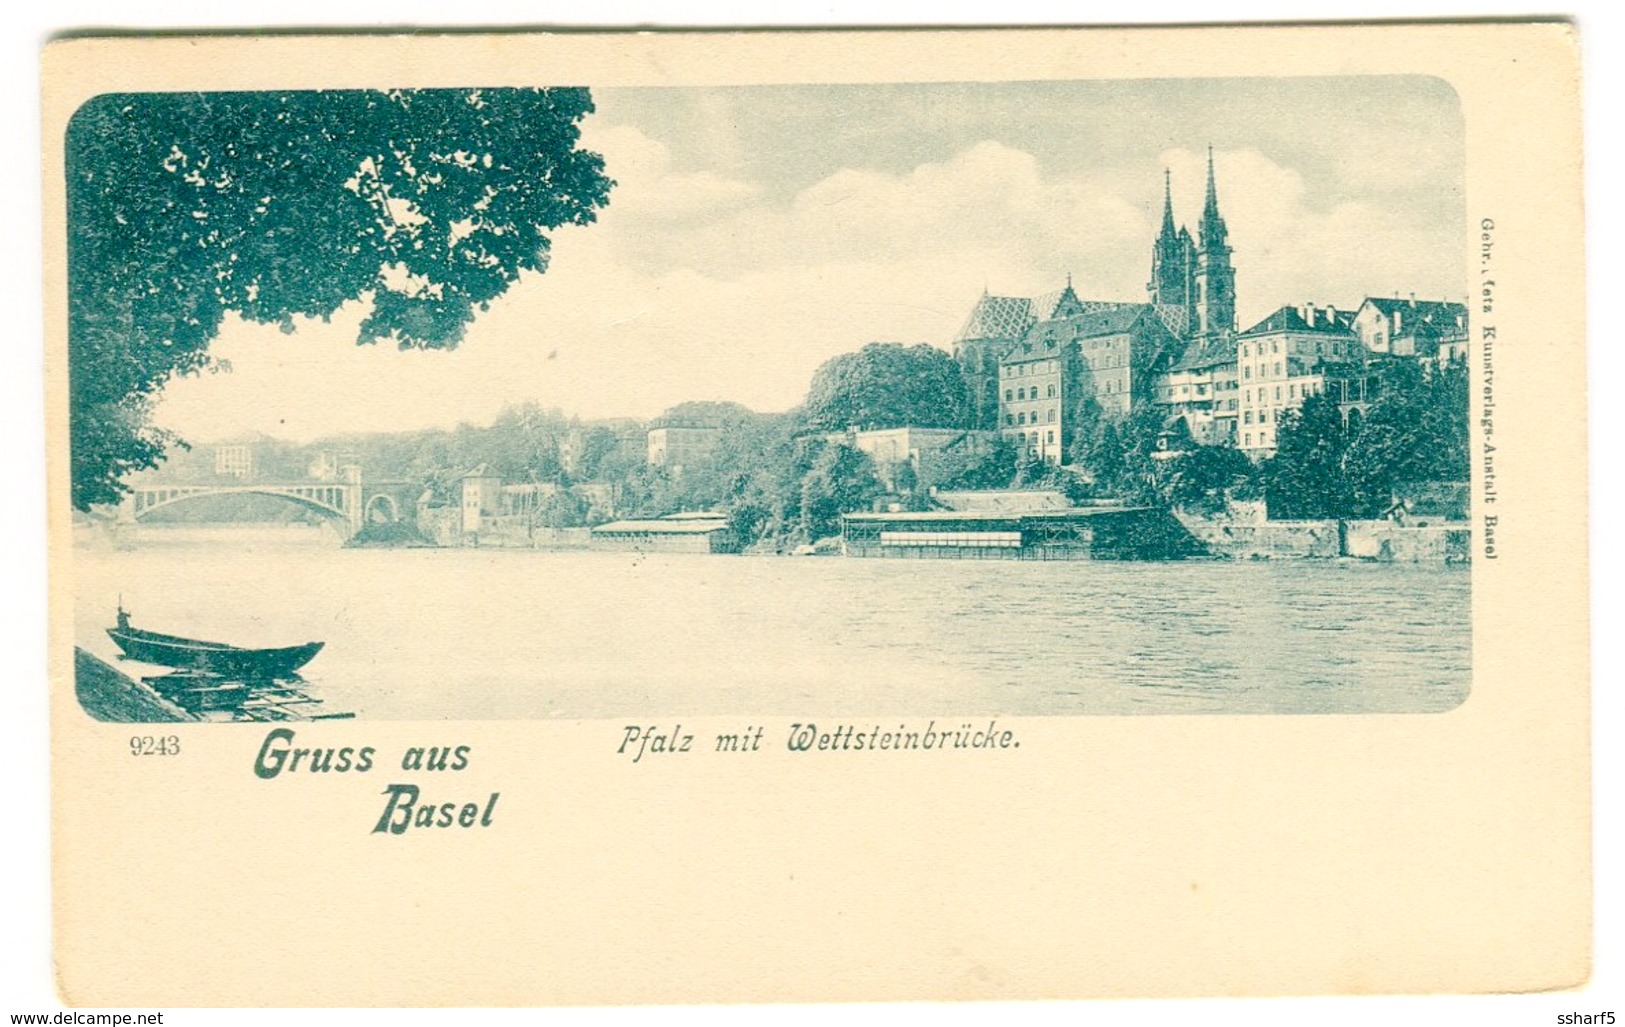 Basel - Pfalz Mit Wettsteinbrücke Gruss Aus Basel 9243 - Basel